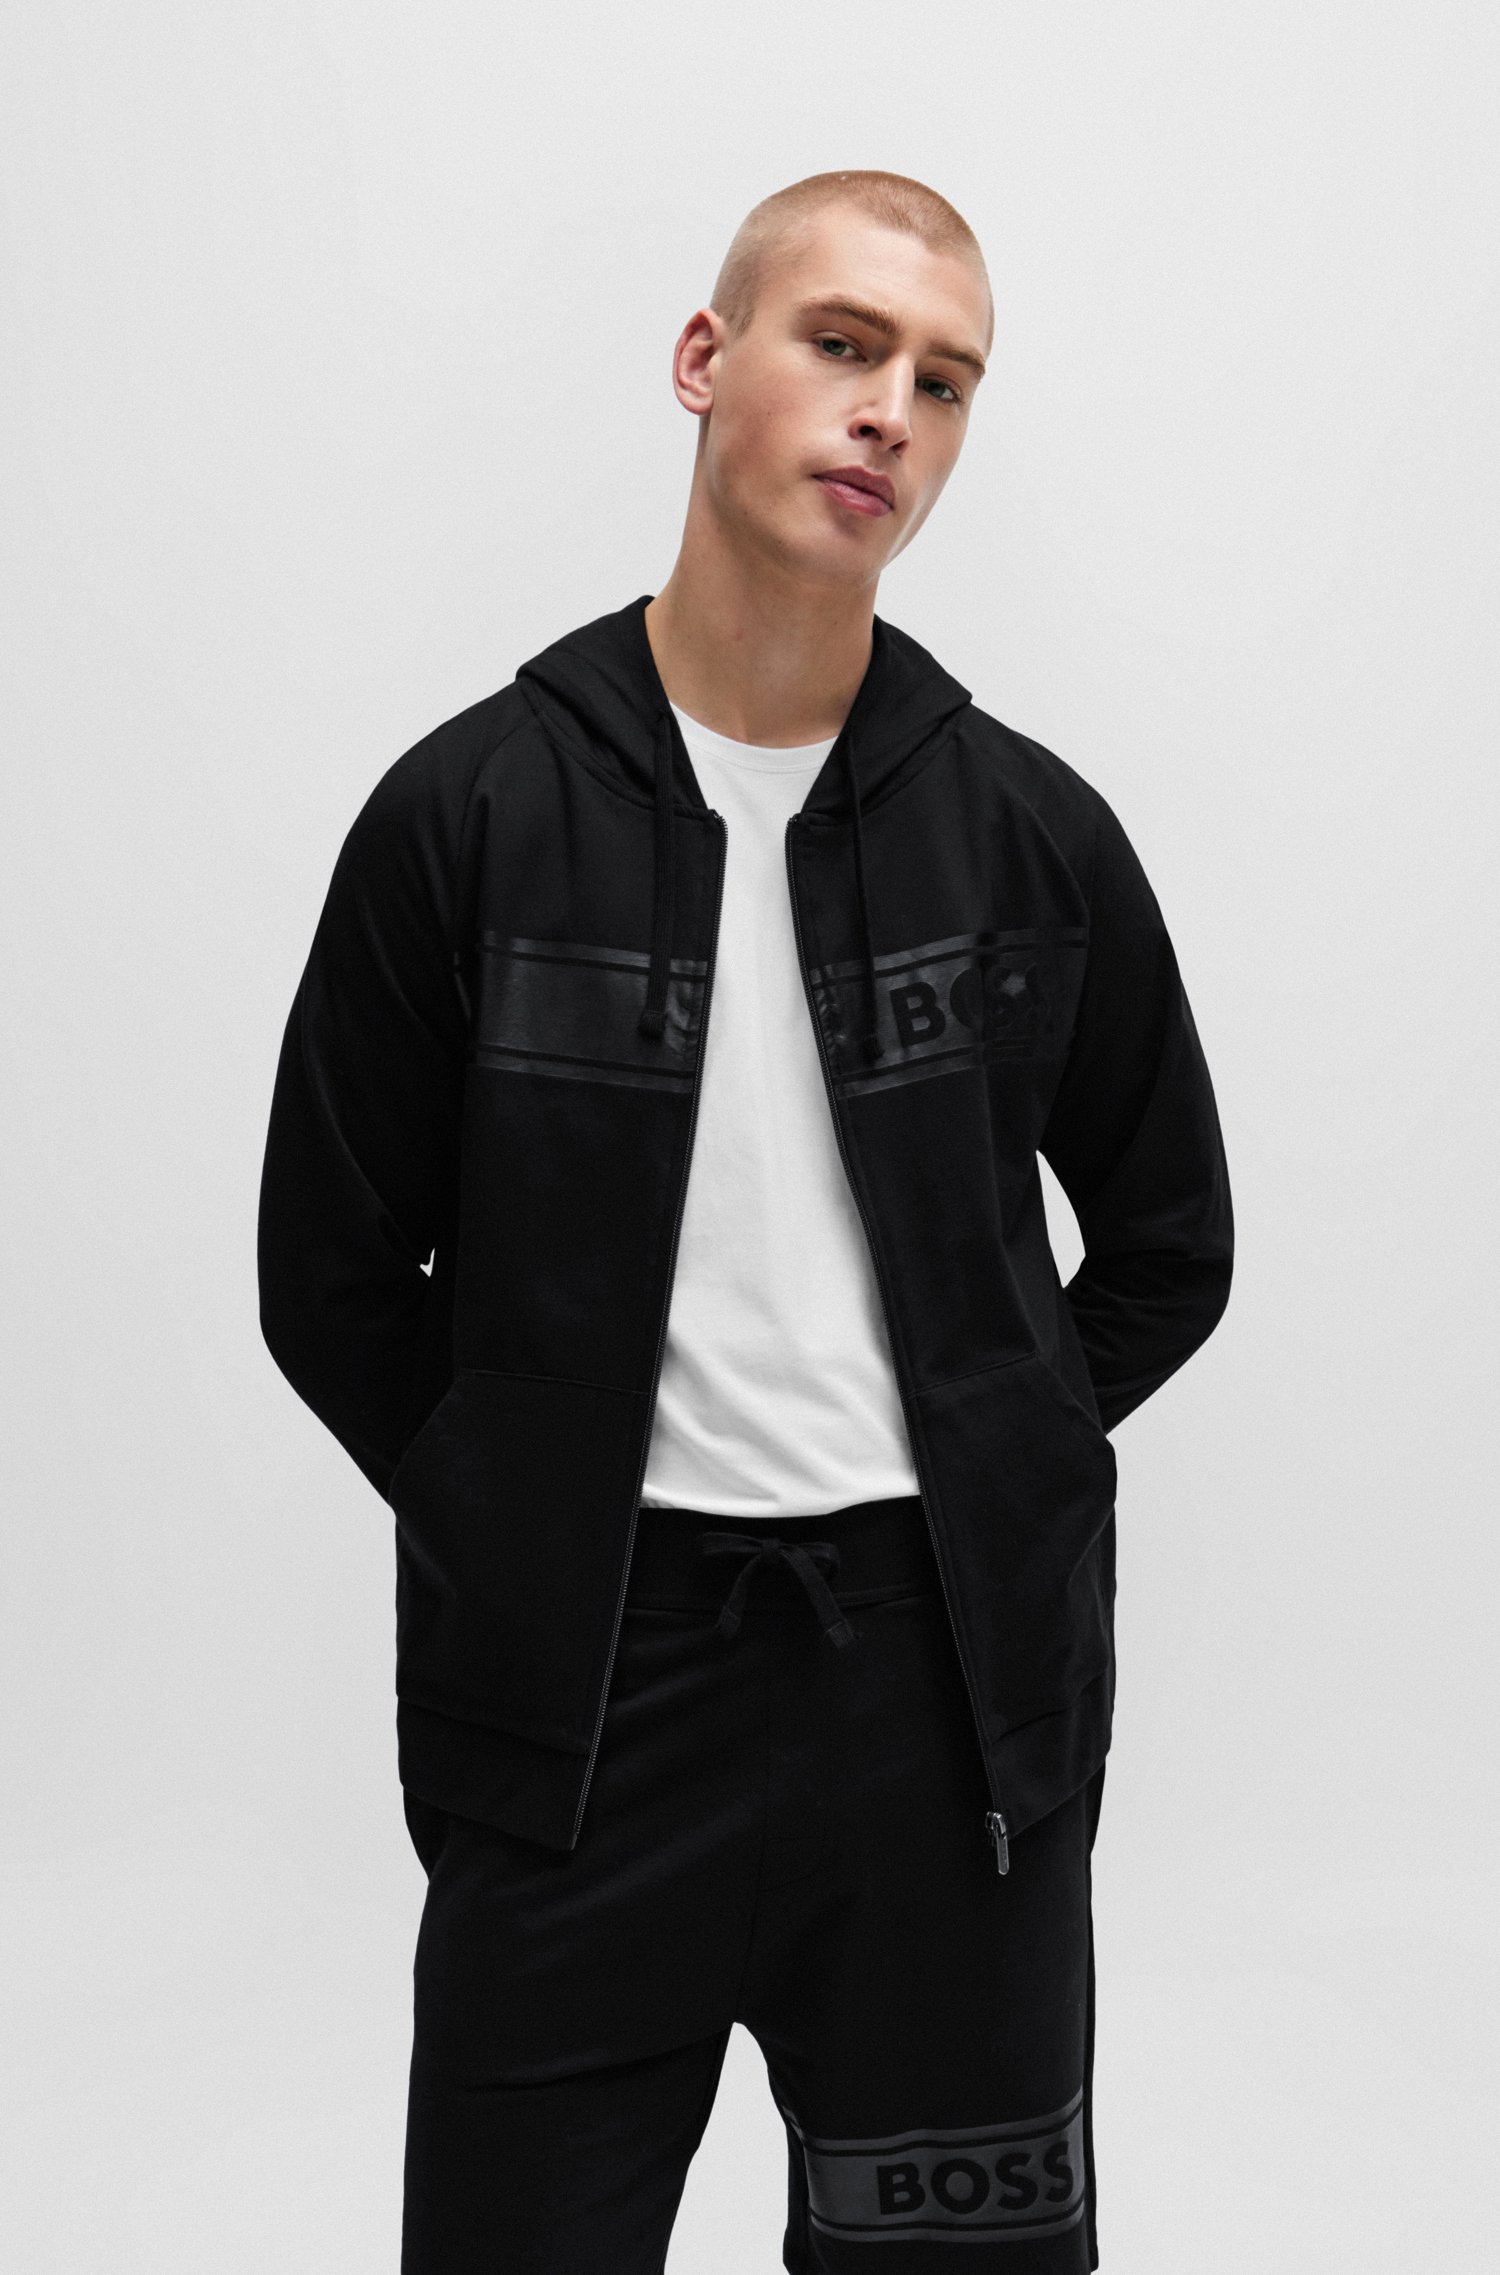 Cotton-terry zip-up hoodie with tonal logo print